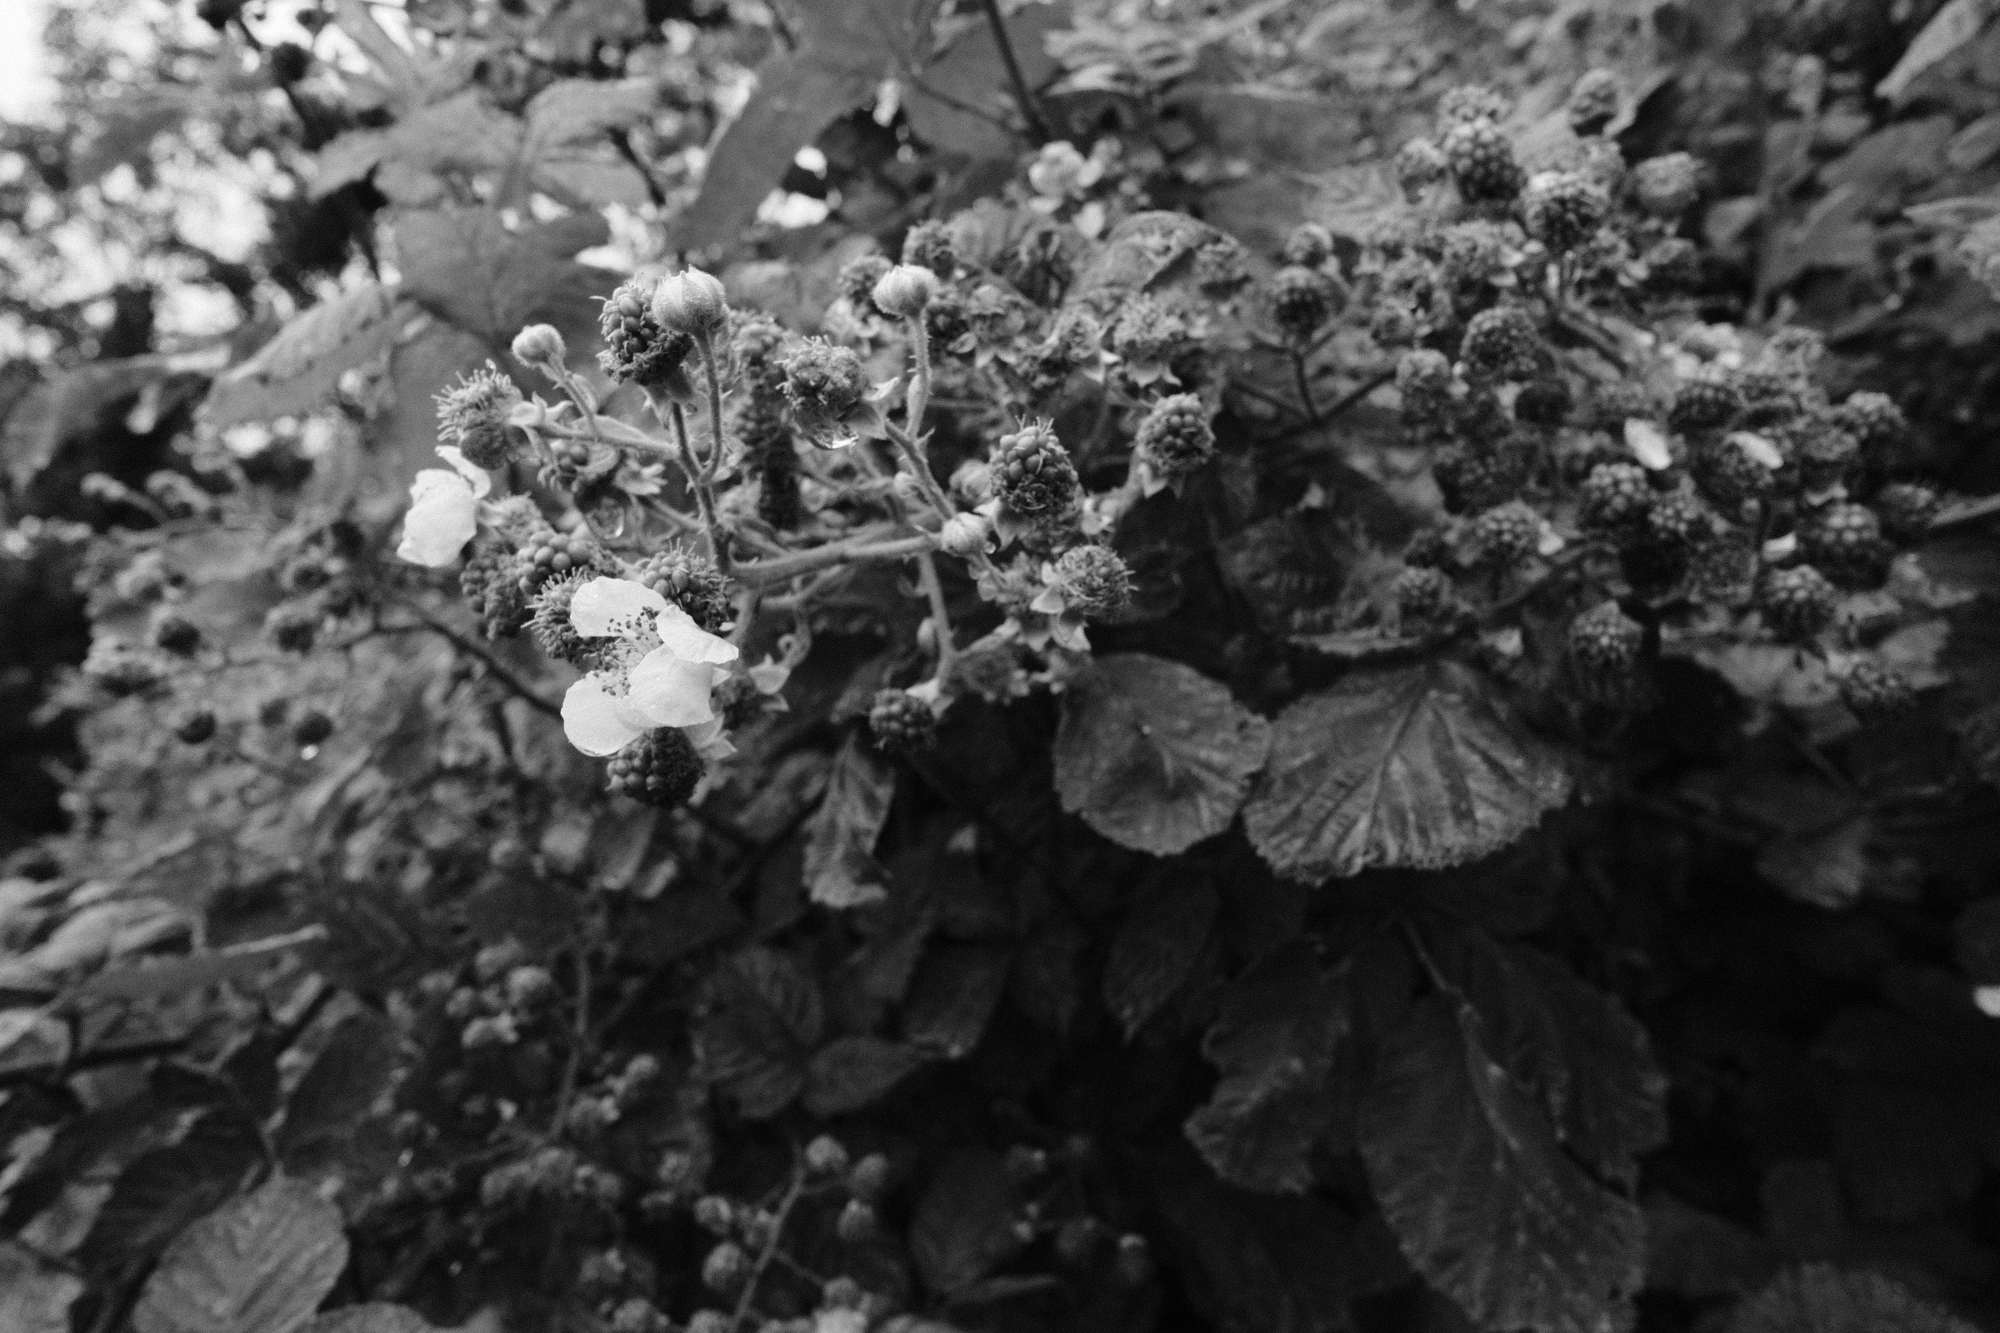 Images of blackberry bushes